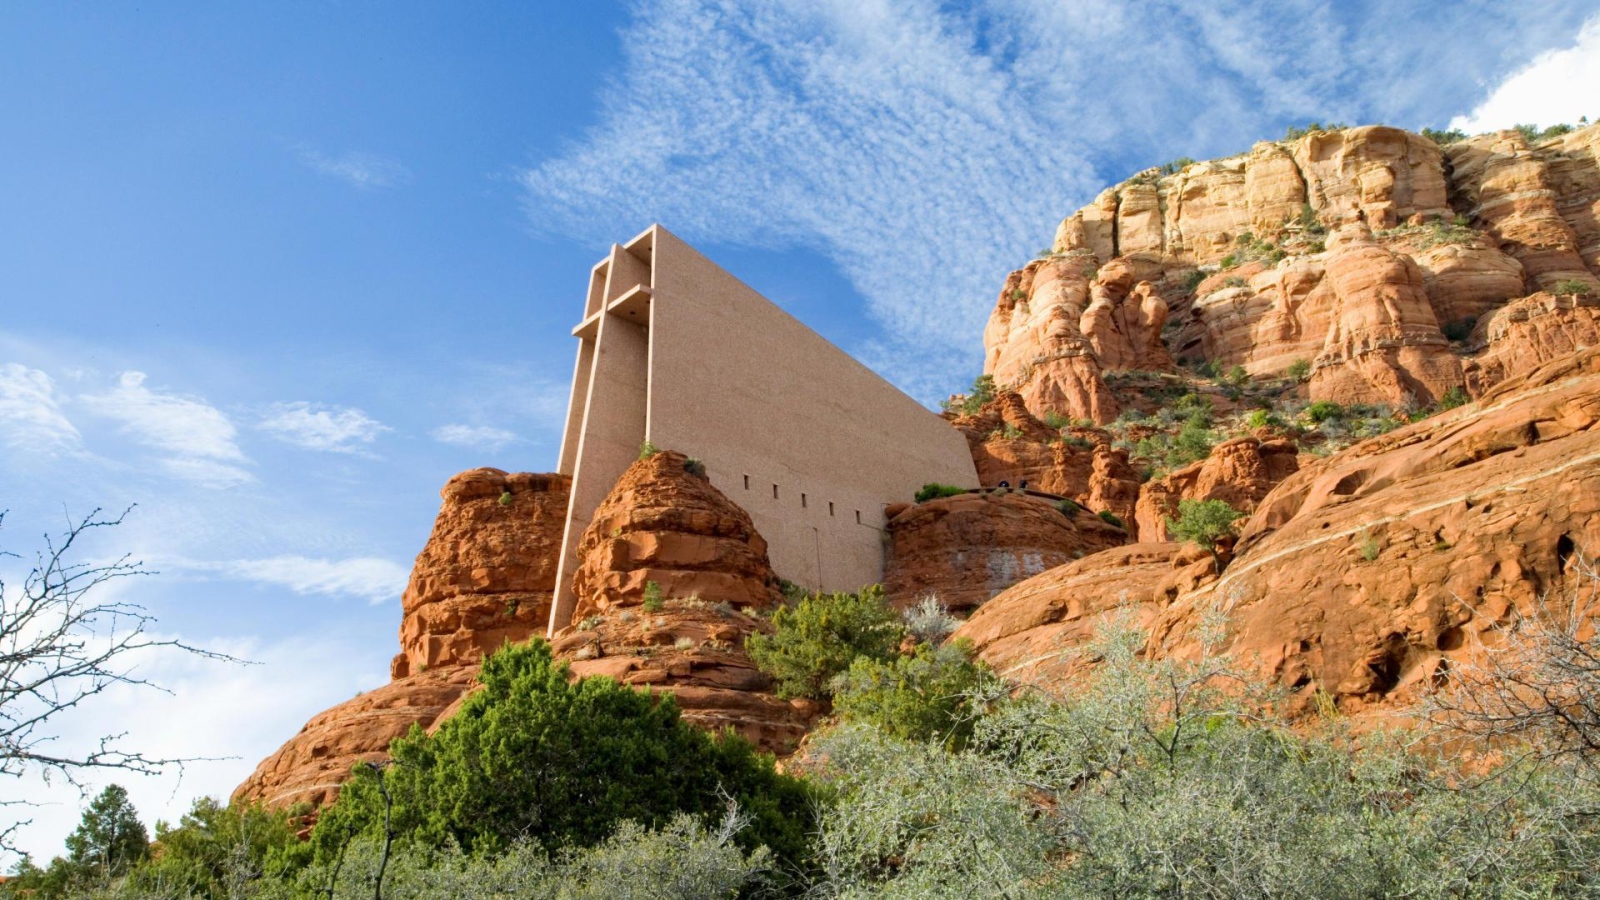 Chapel in the rock. Arizona, United States